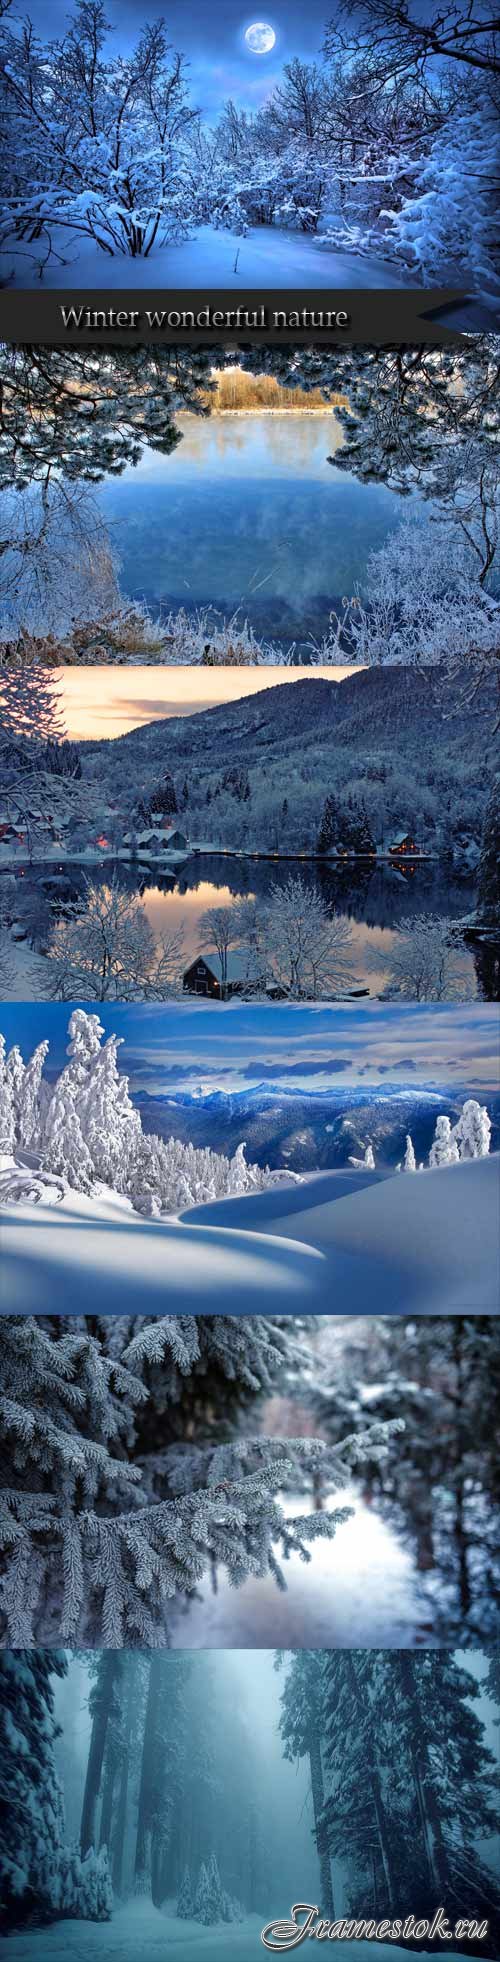 Winter wonderful nature